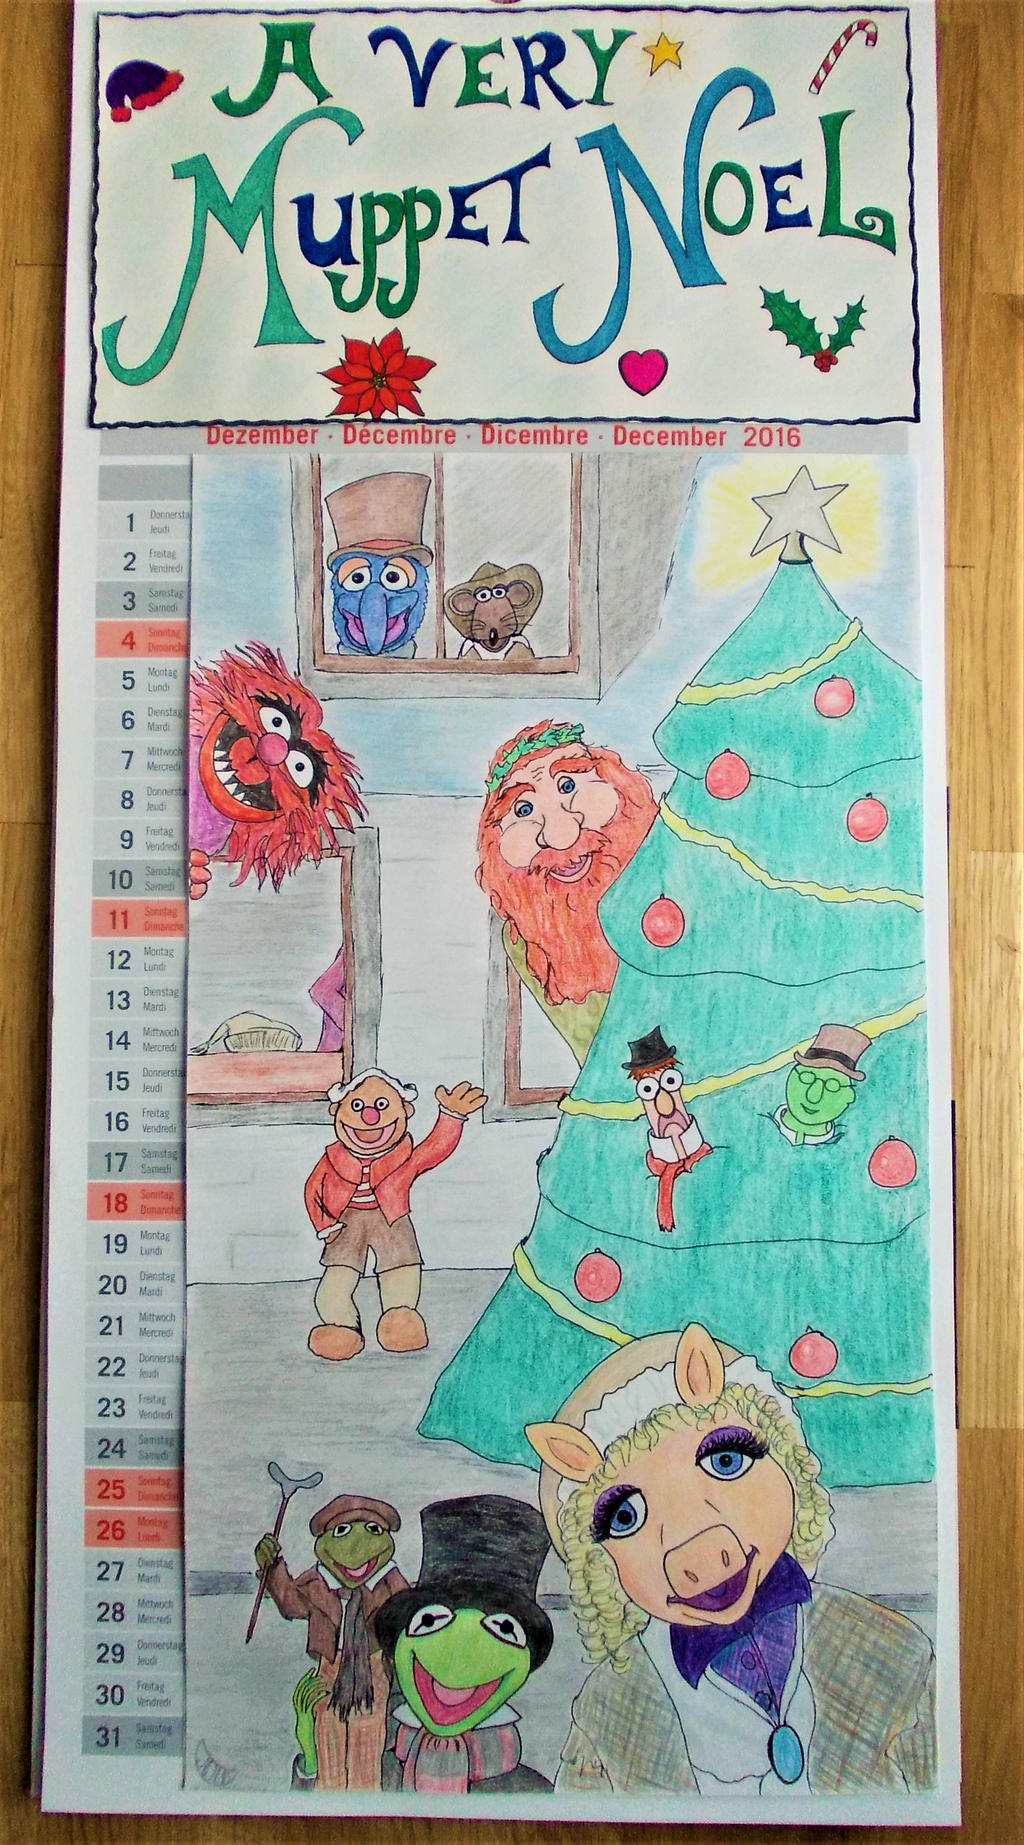 A Very Muppet Noel! - Calendar for December